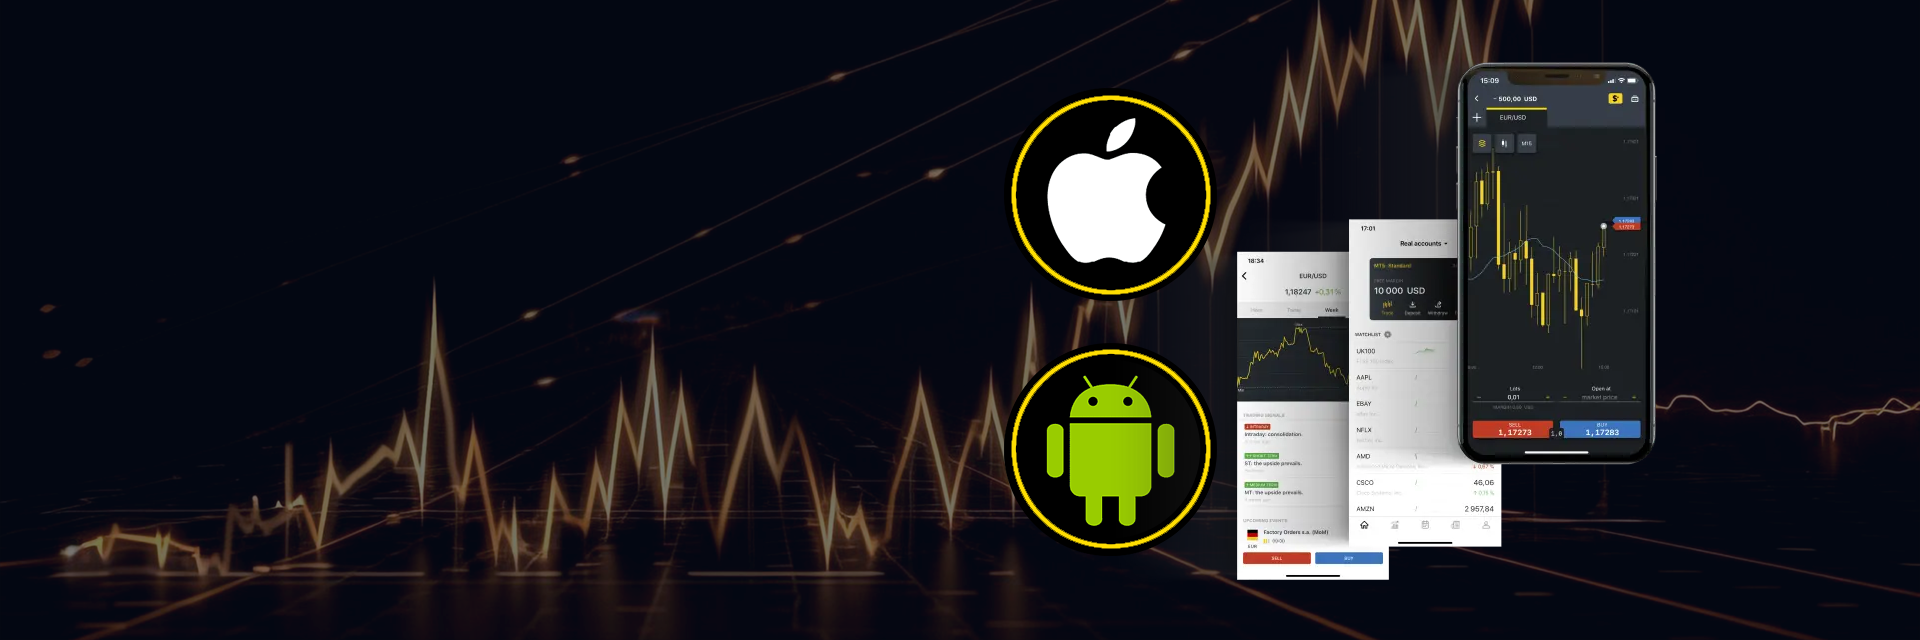 Exness डाउनलोड करें: Android APK और iPhone मोबाइल ऐप